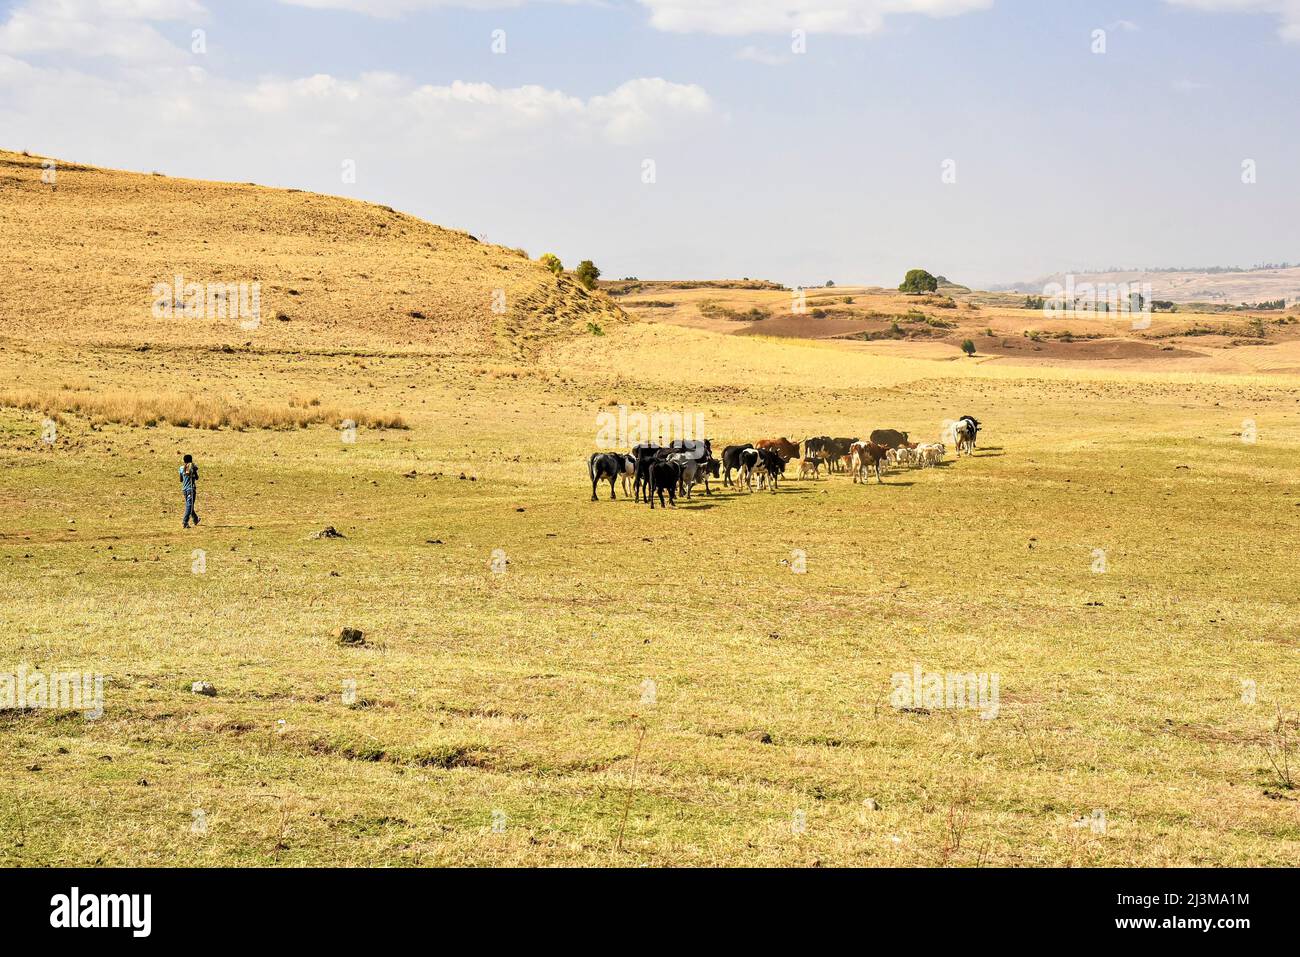 Cattle herder moving cattle across arid farmland; Ethiopia Stock Photo